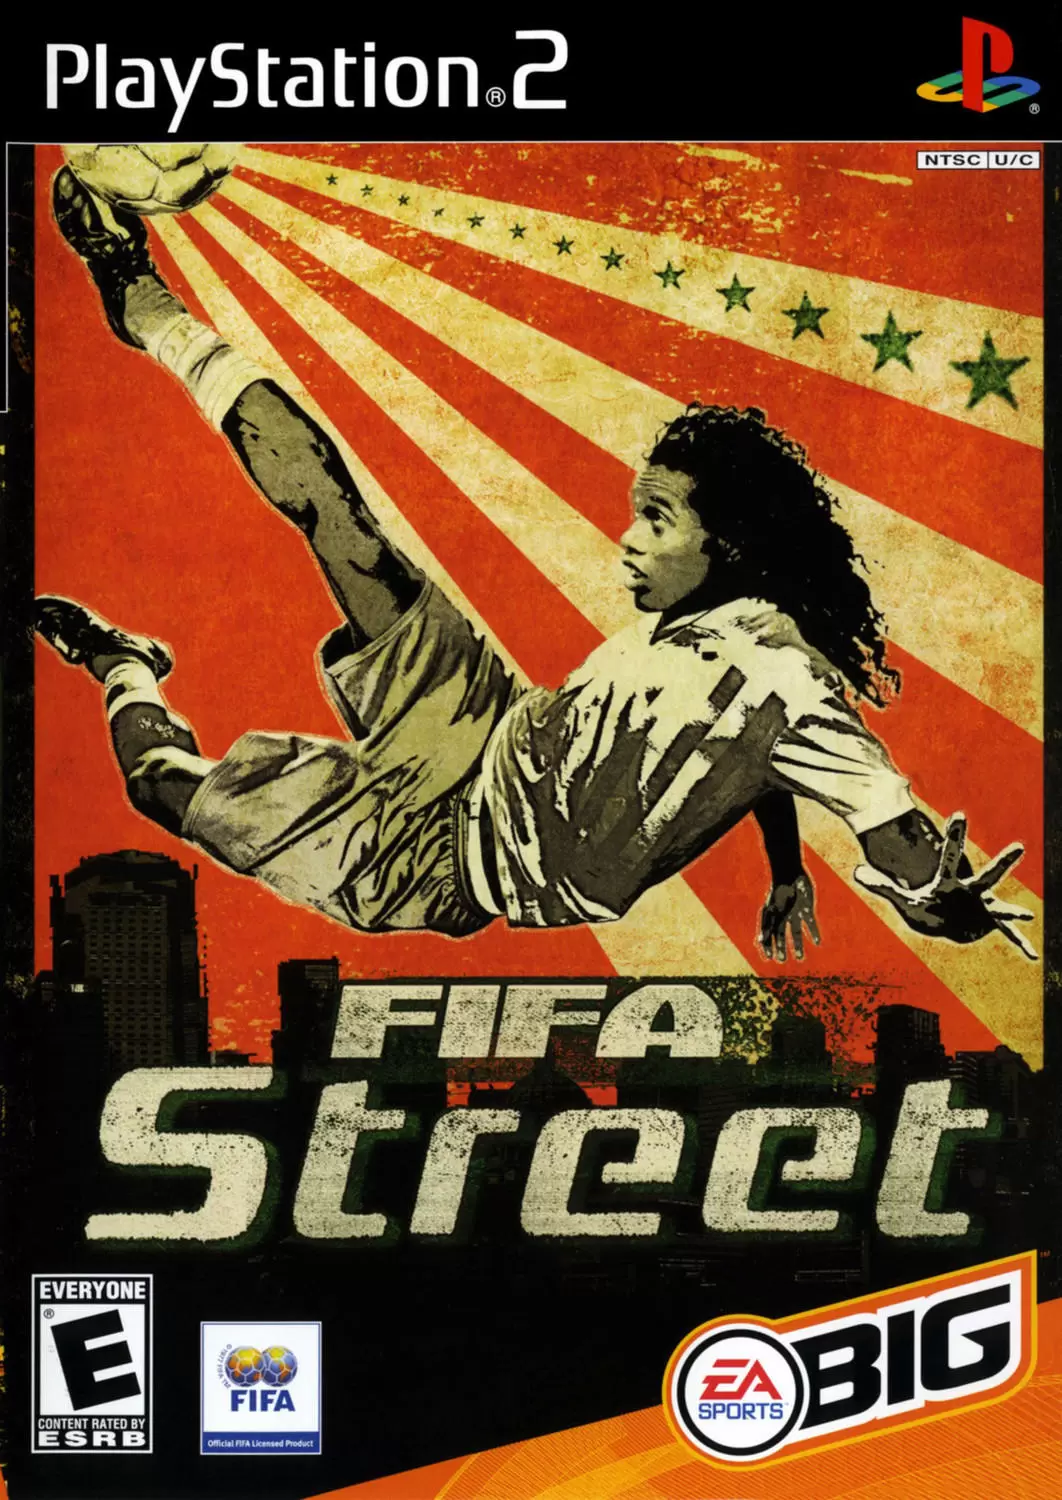 PS2 Games - FIFA Street